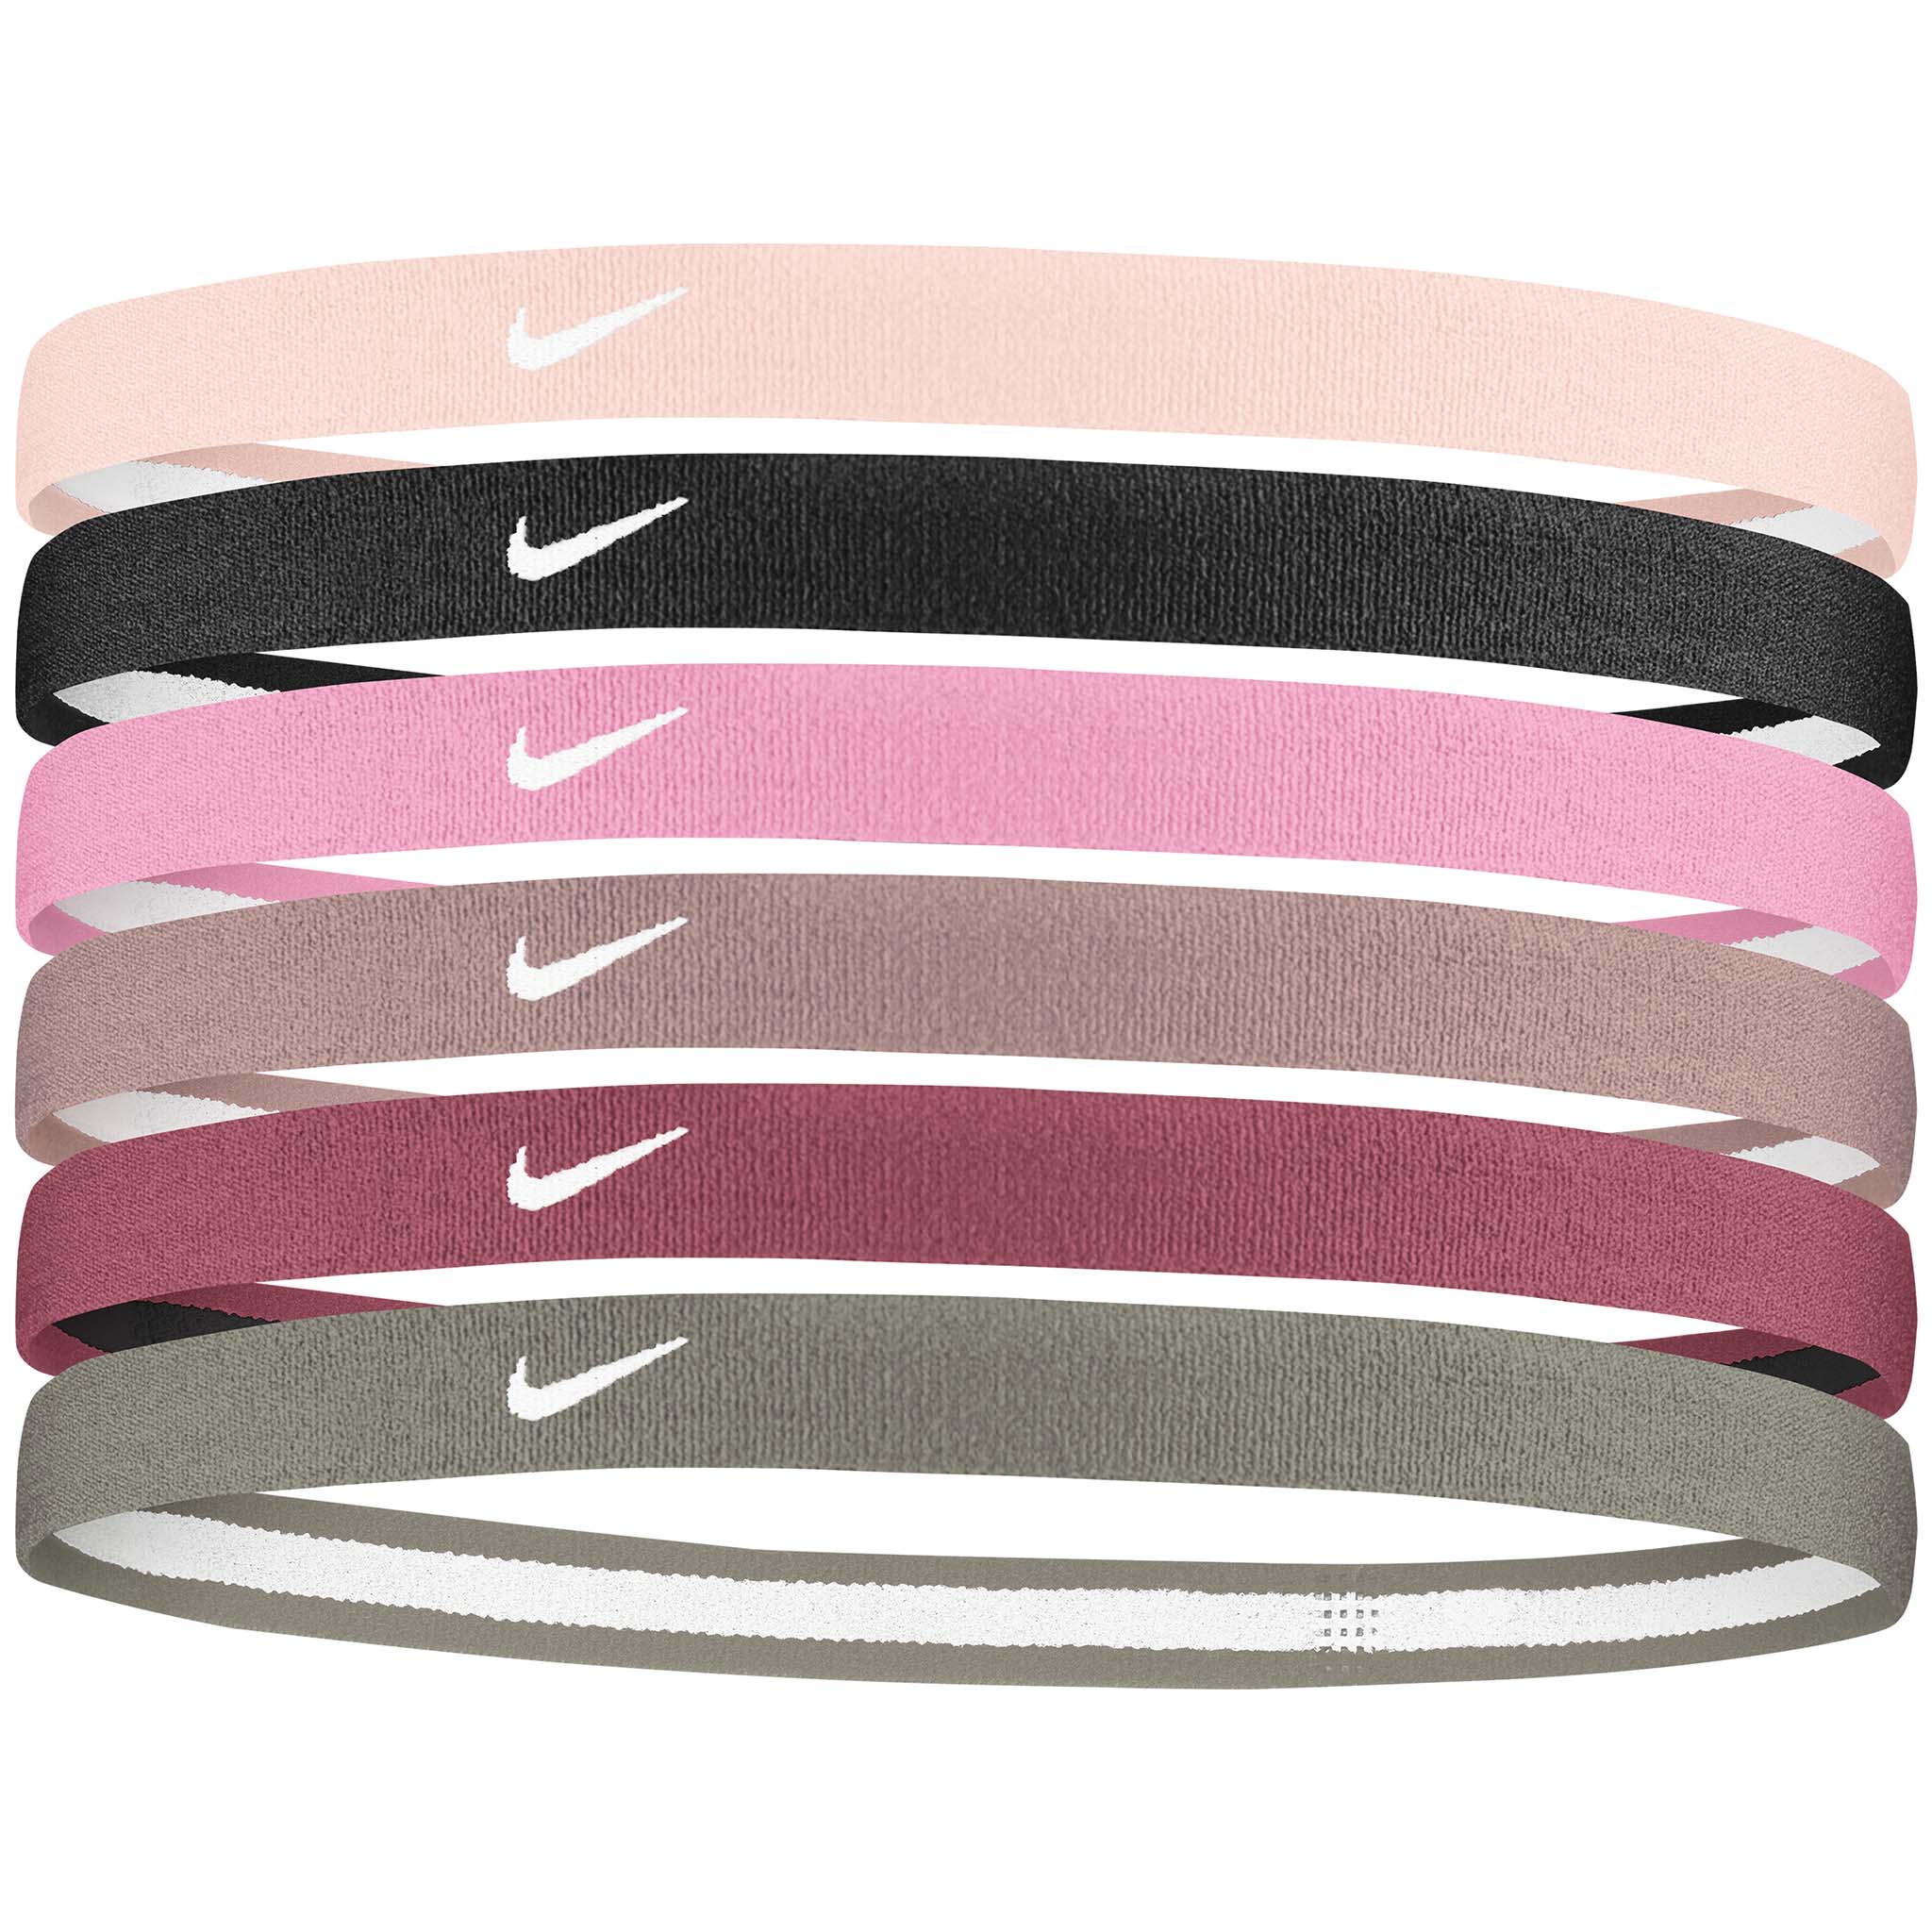 Резинка найк. Nike Swoosh Sport Headbands. Nike Swoosh Headband Multi. Повязка для волос. Спортивная повязка на голову найк.